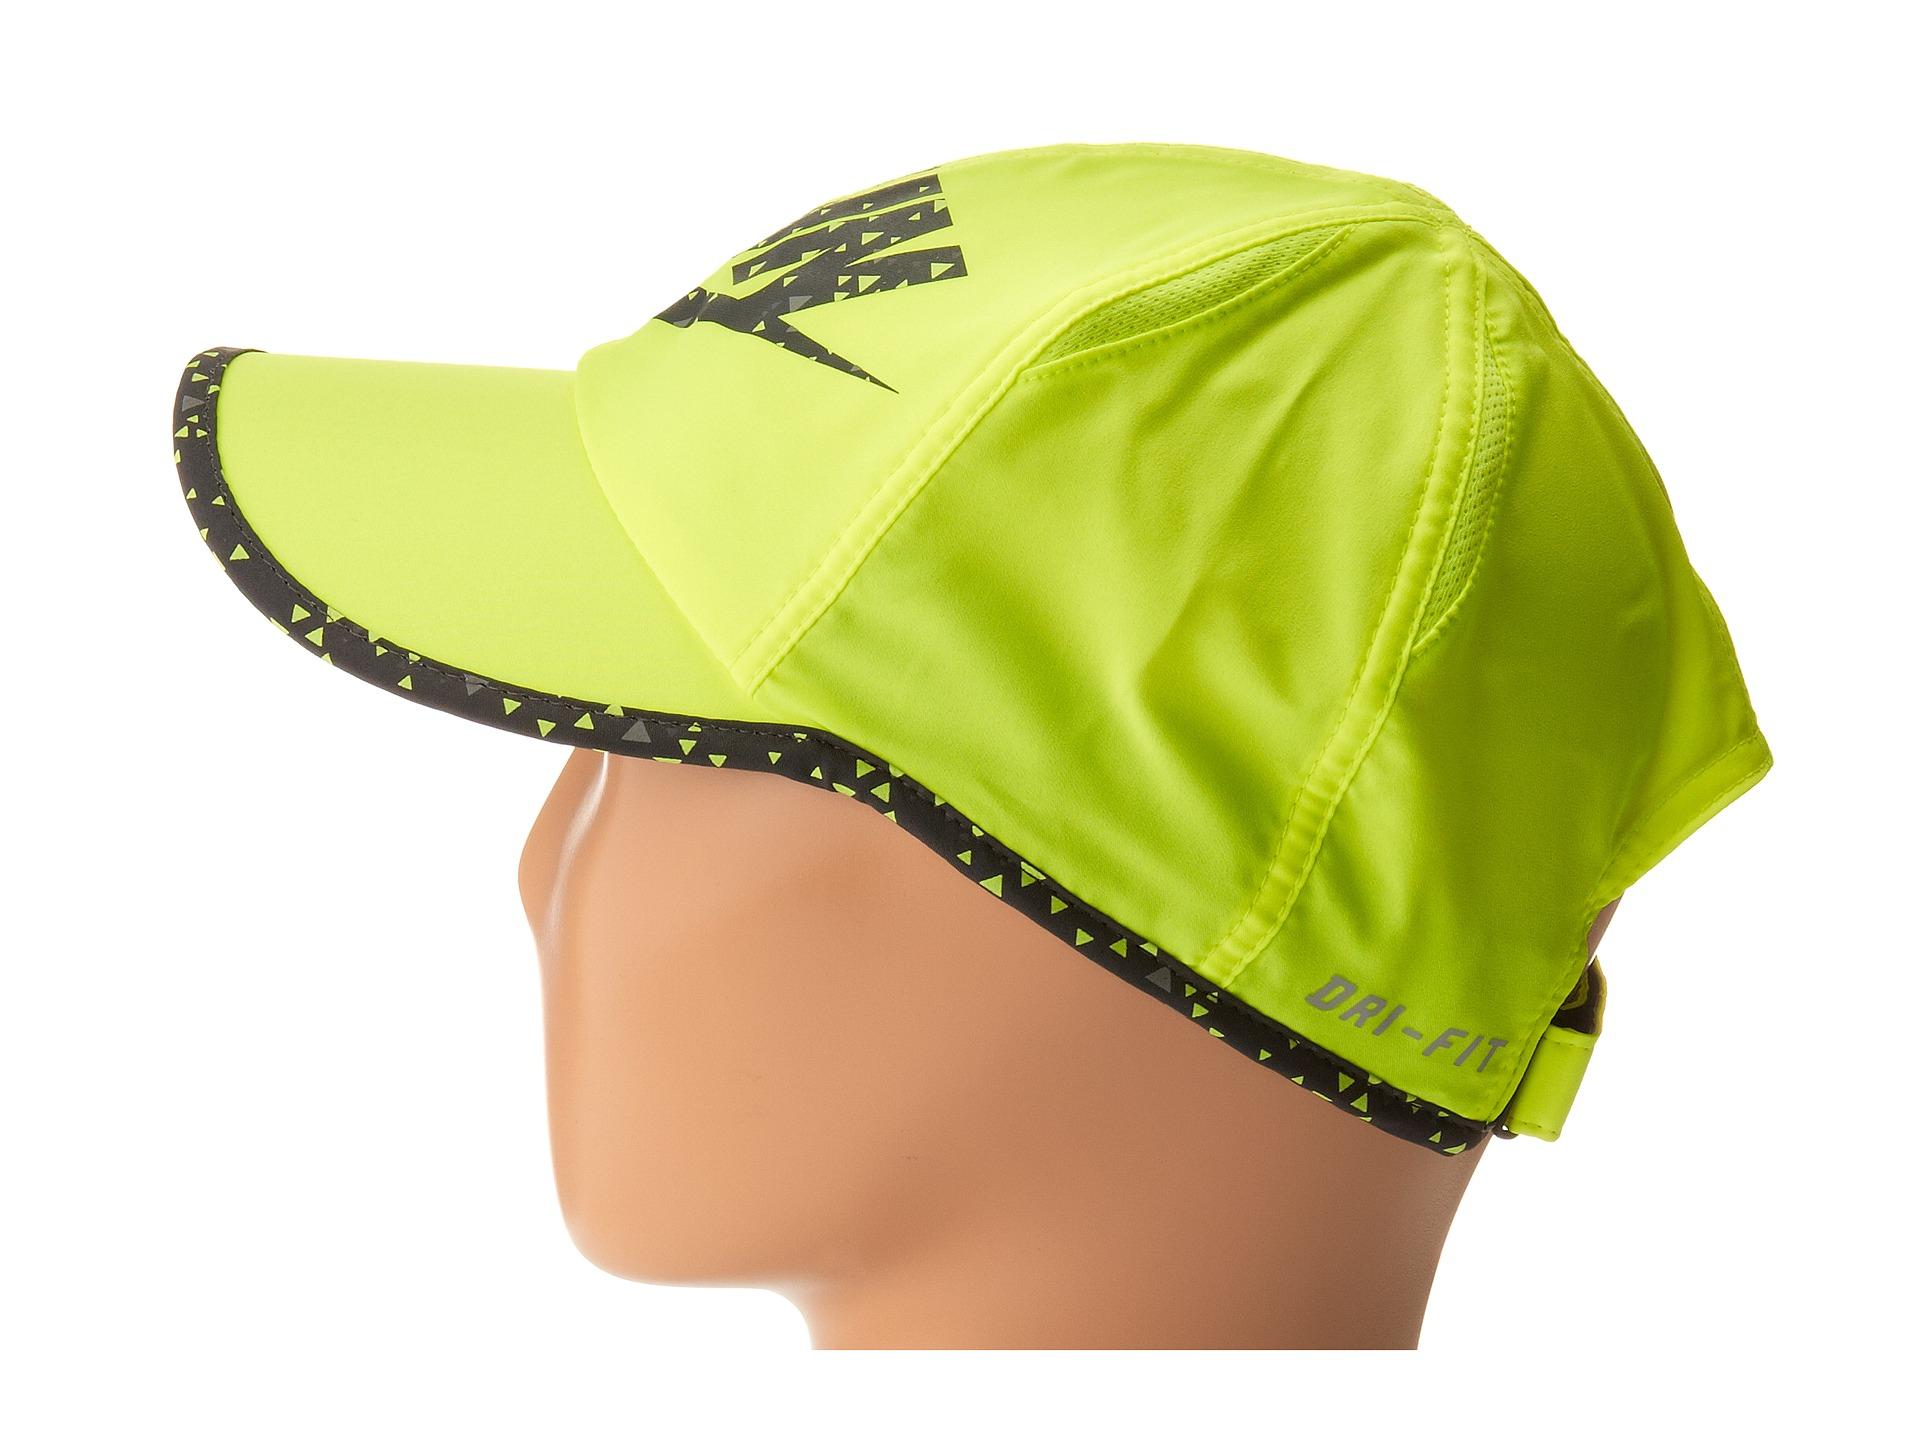 Lyst - Nike Seasonal Featherlight Cap in Yellow